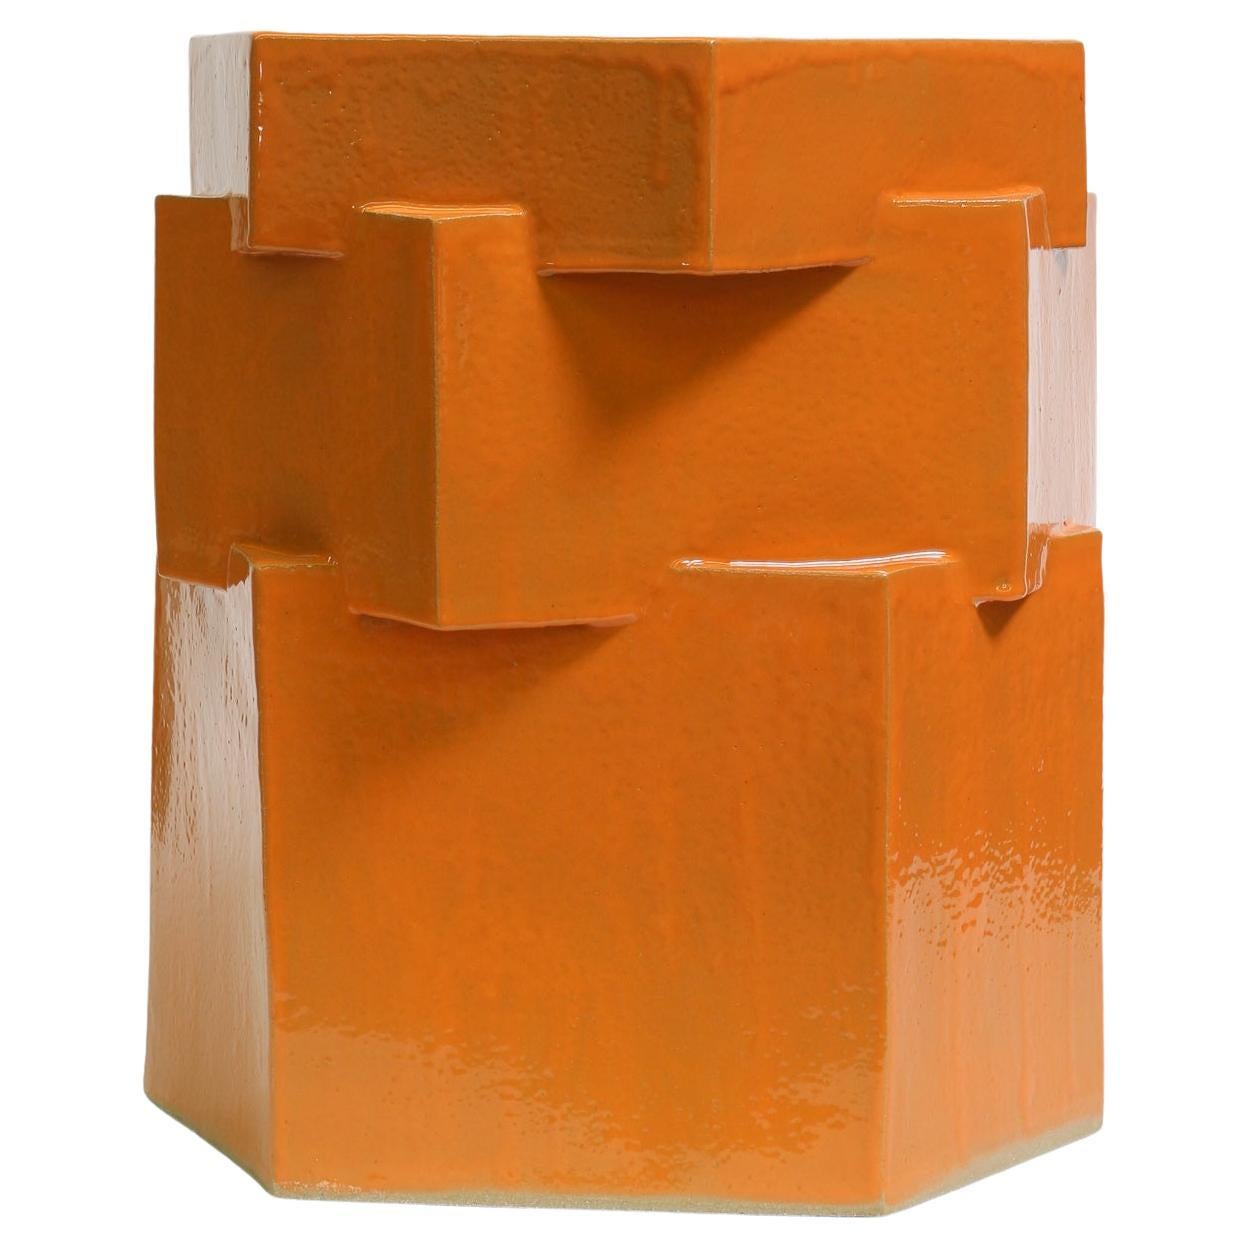 Three-Tier Ceramic Hex Planter in Gloss Orange by Bzippy